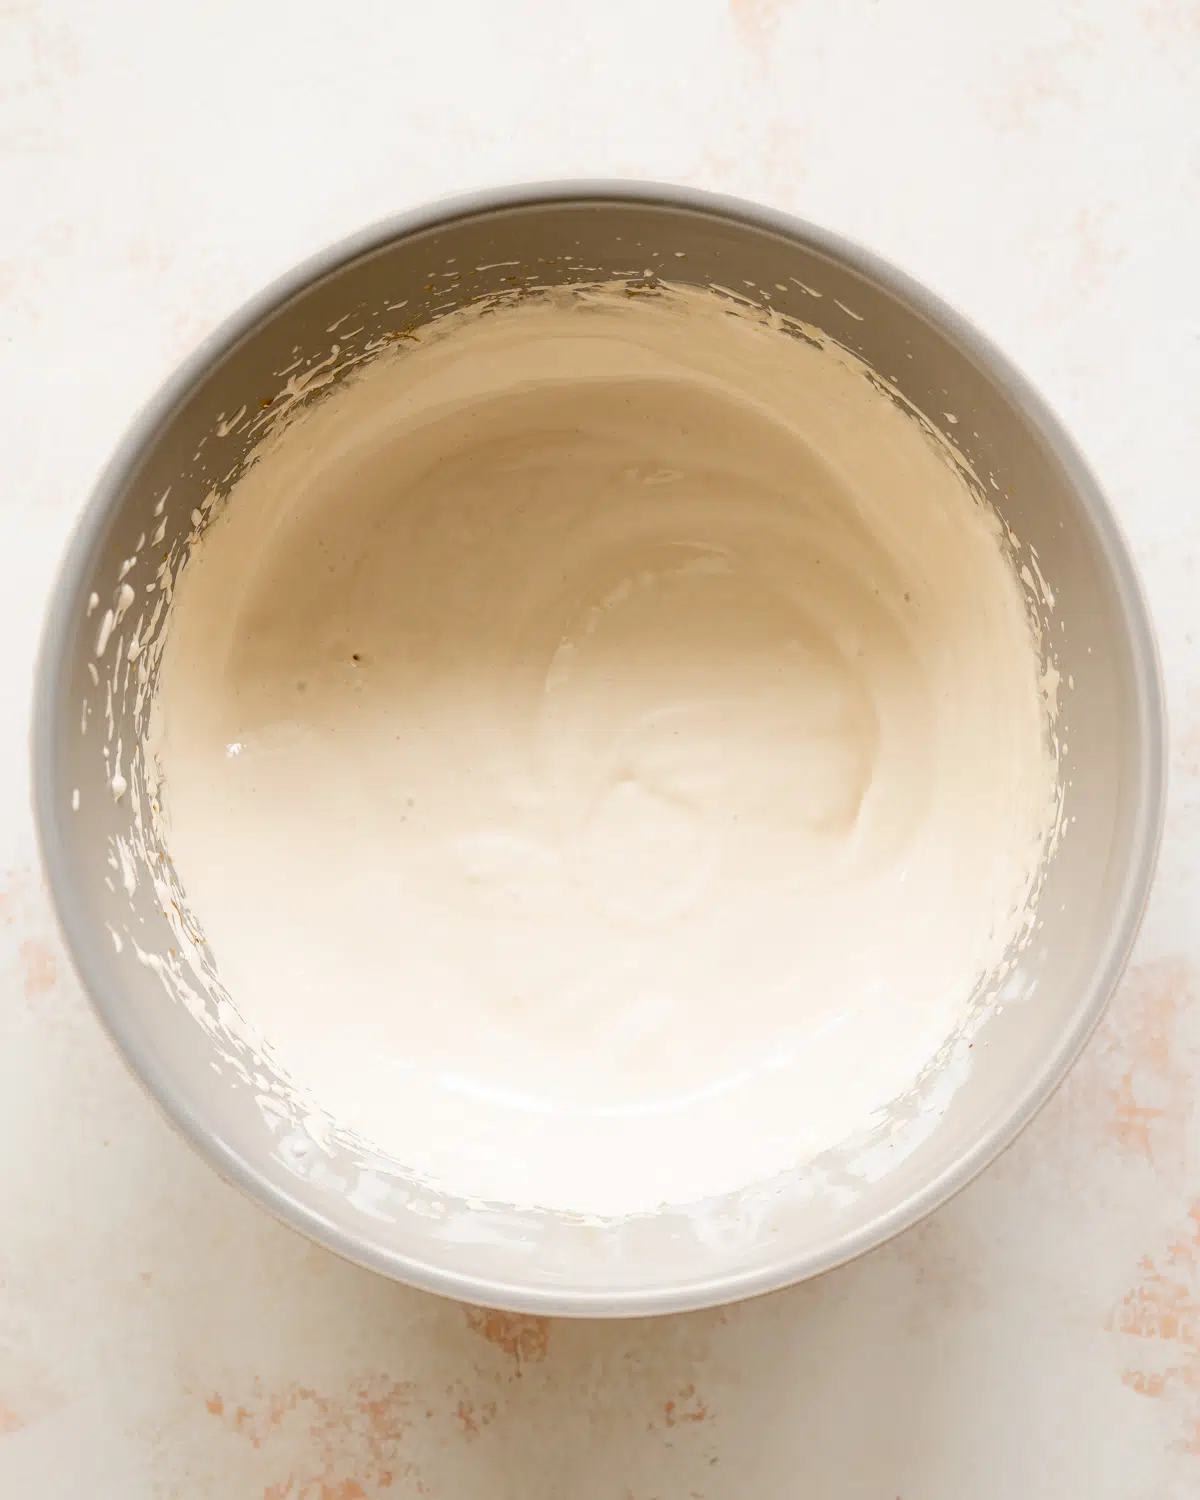 making dairy free chocolate buttercream.